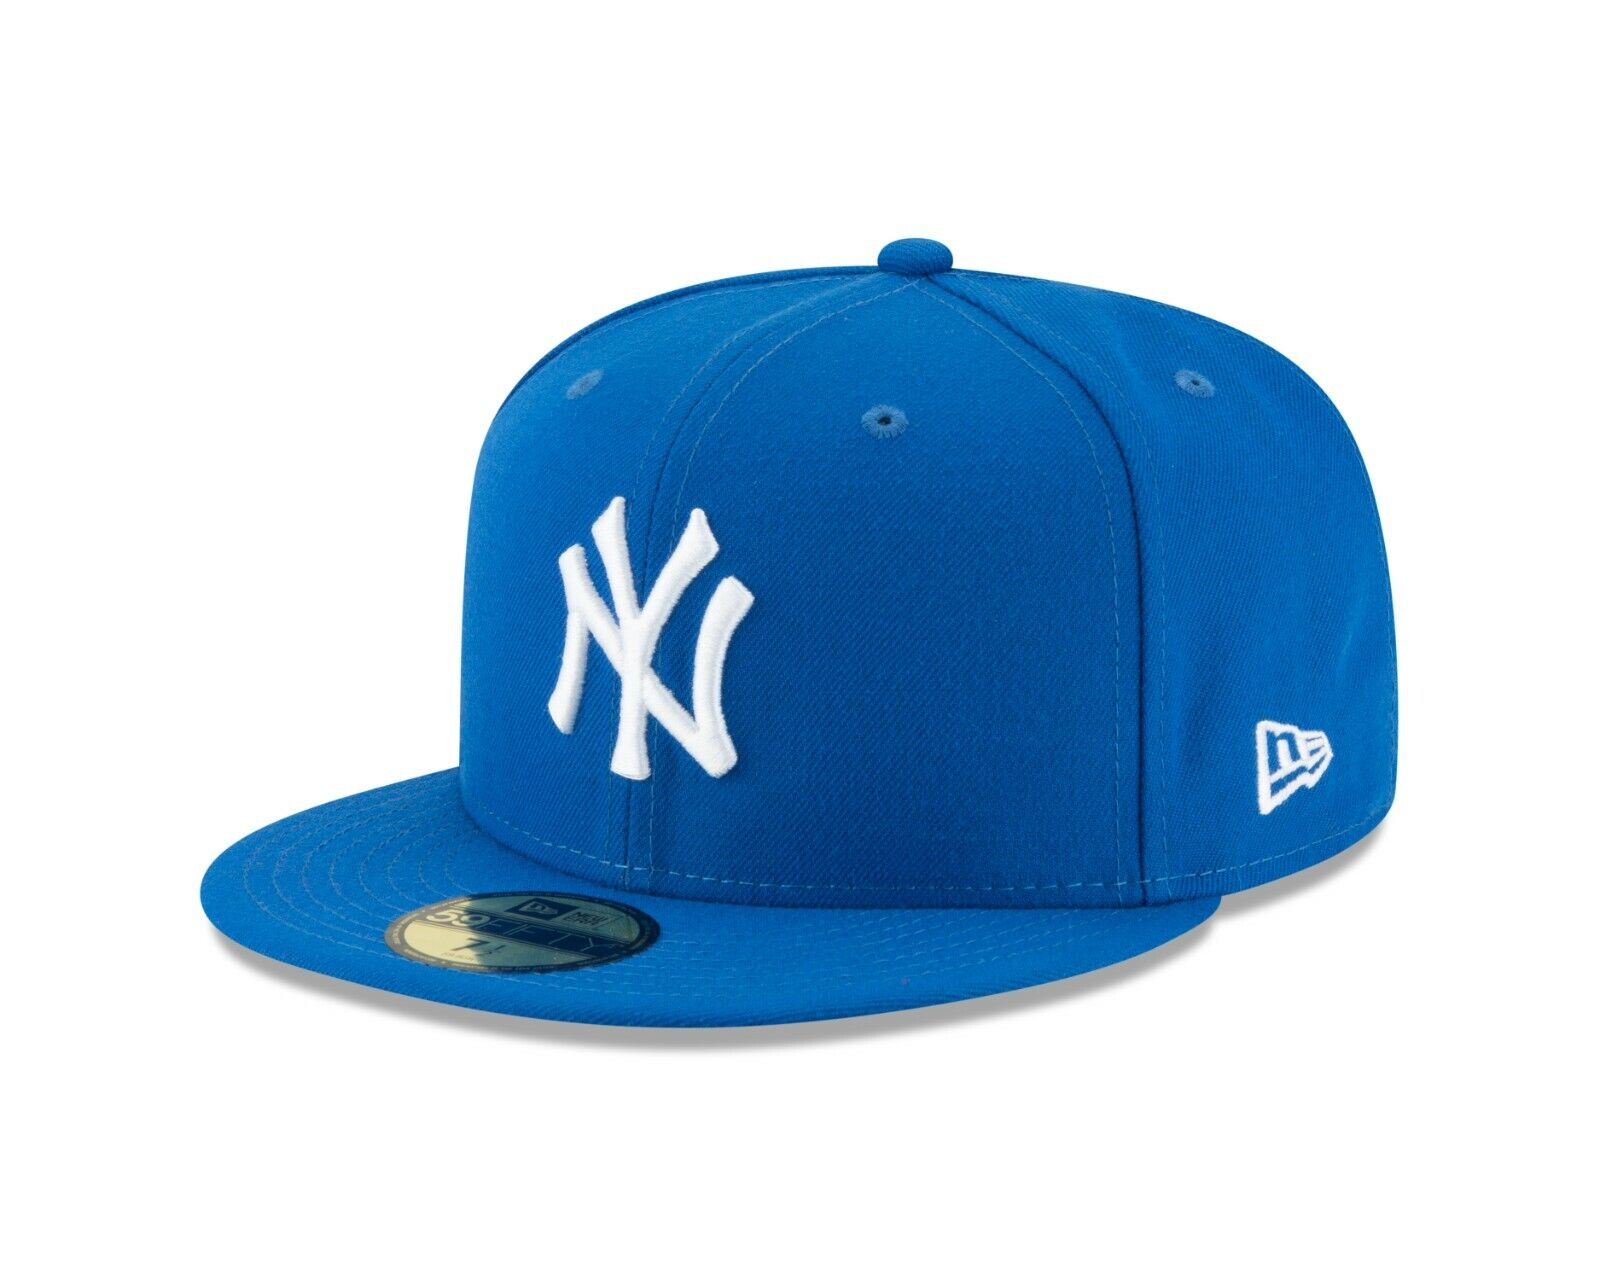 blue yankees hat